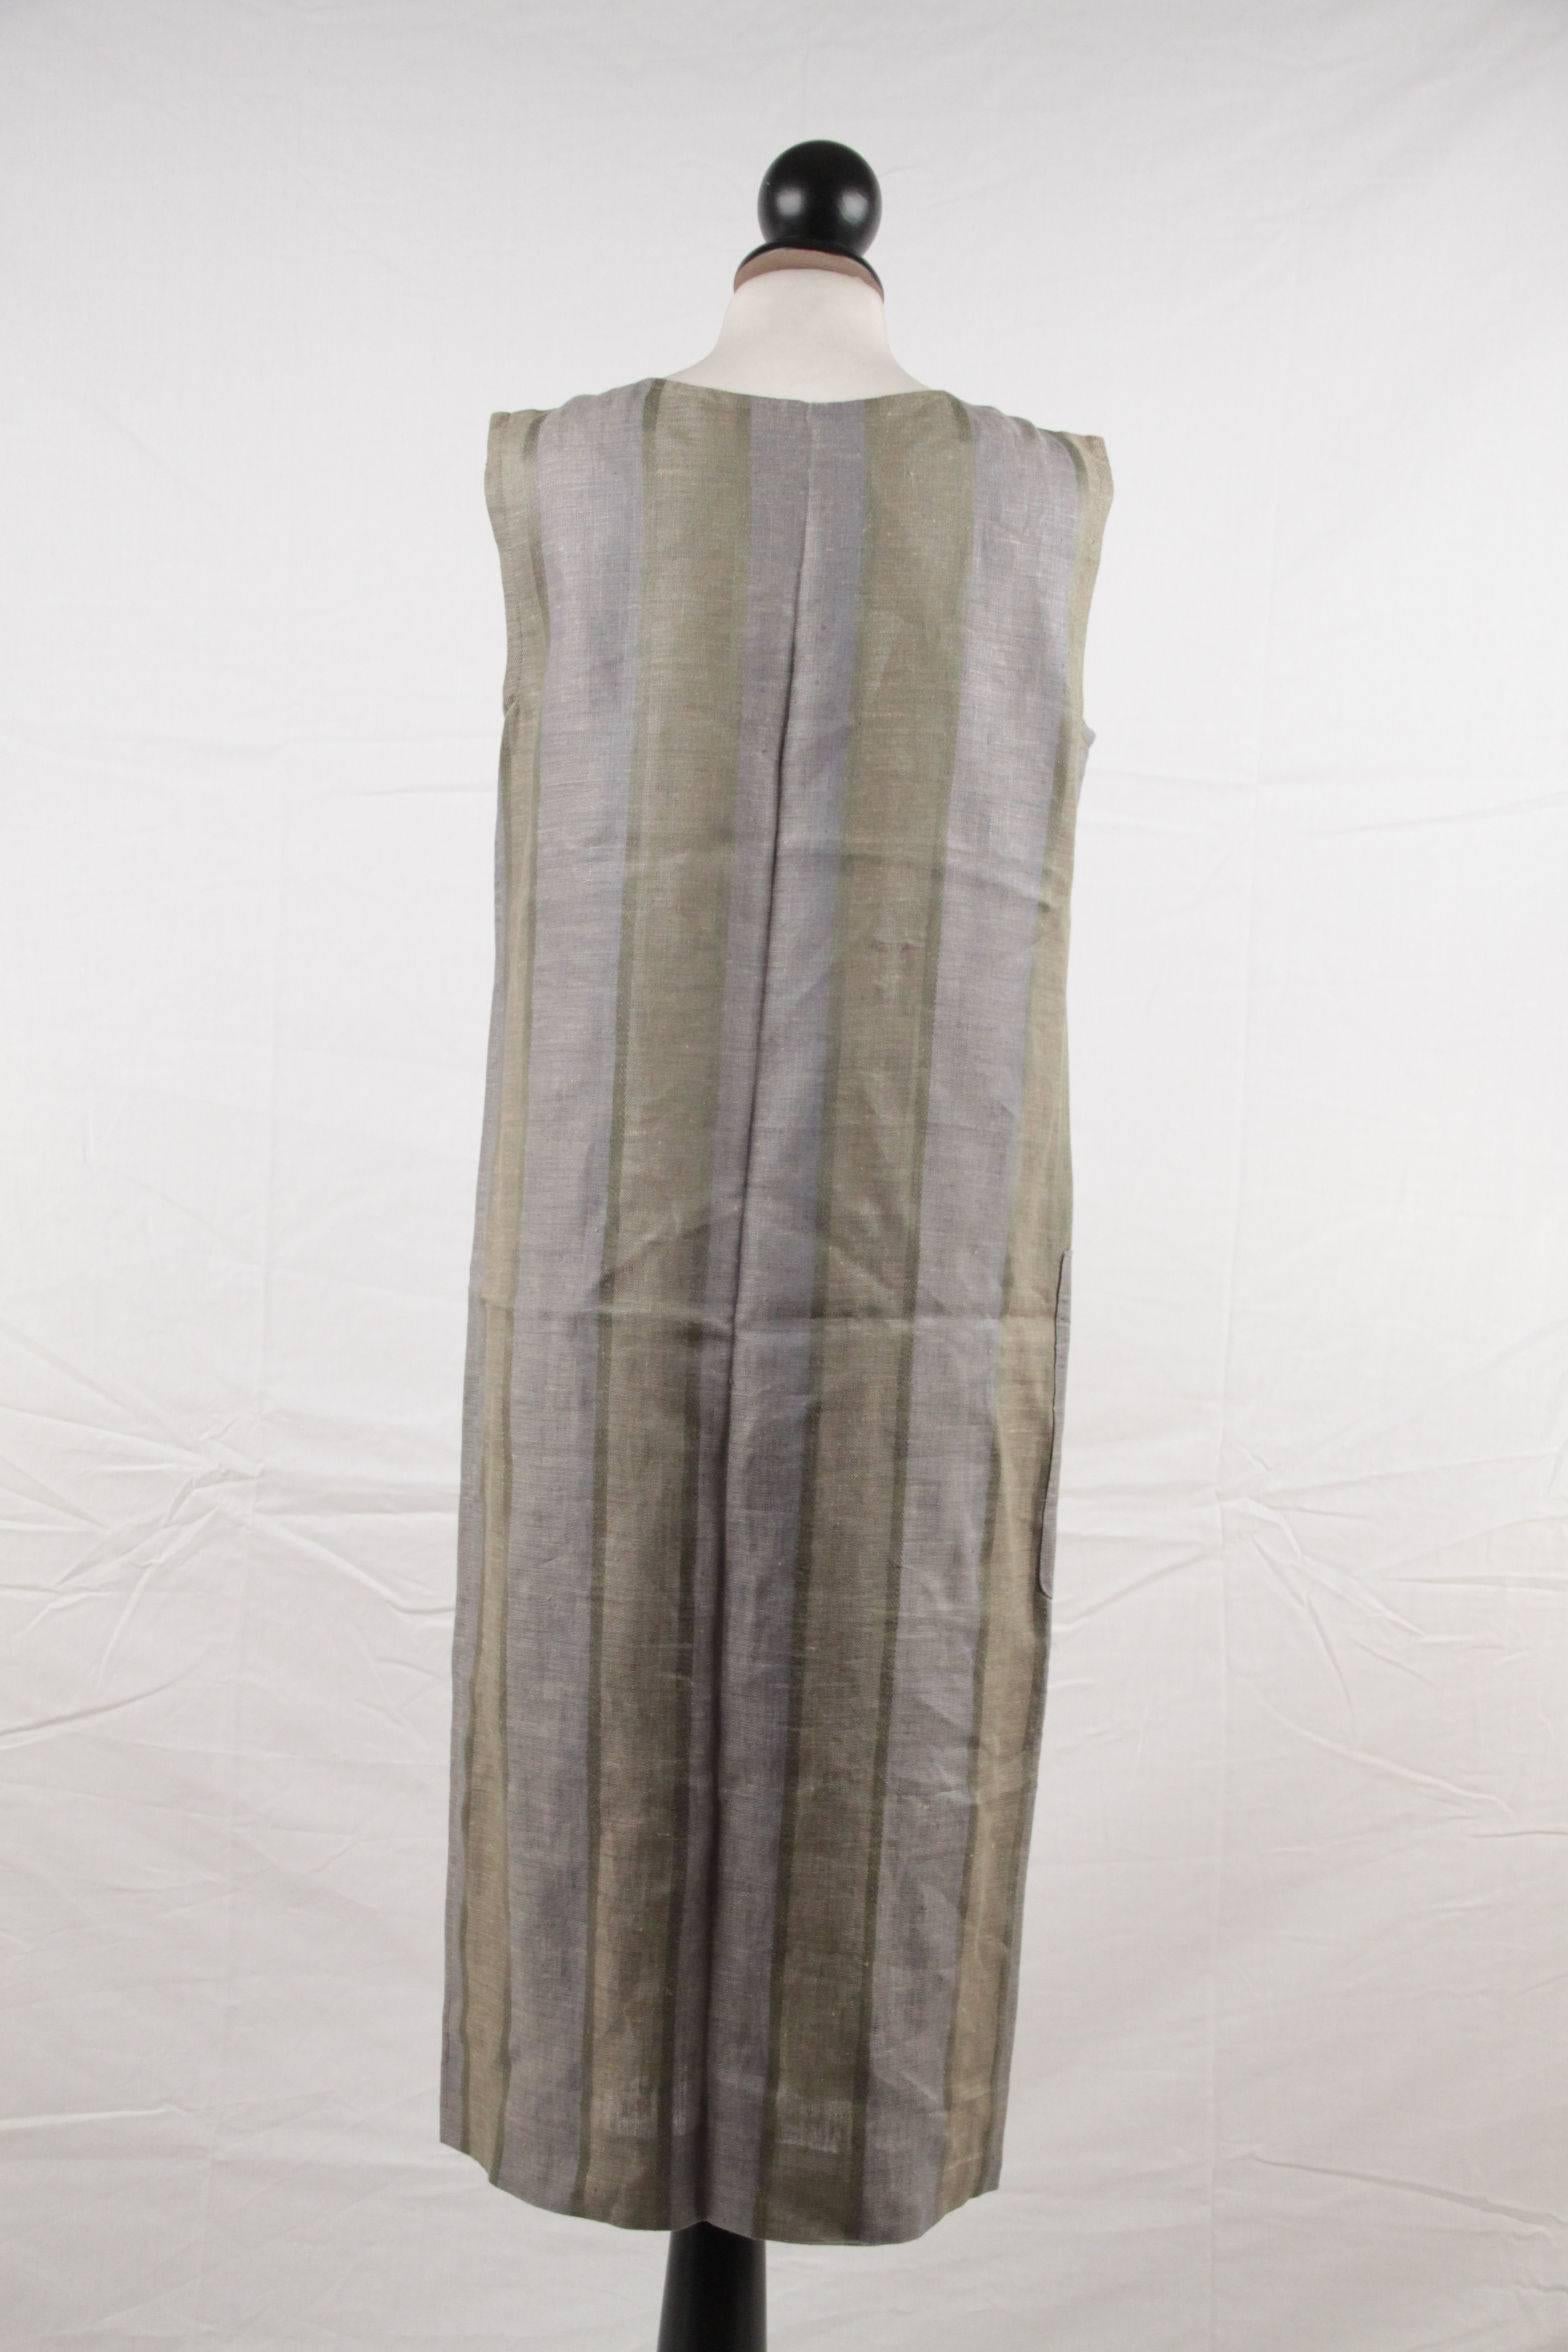 CHRISTIAN DIOR Vintage Green Striped SLEEVELESS SMOCK DRESS Size 36 1